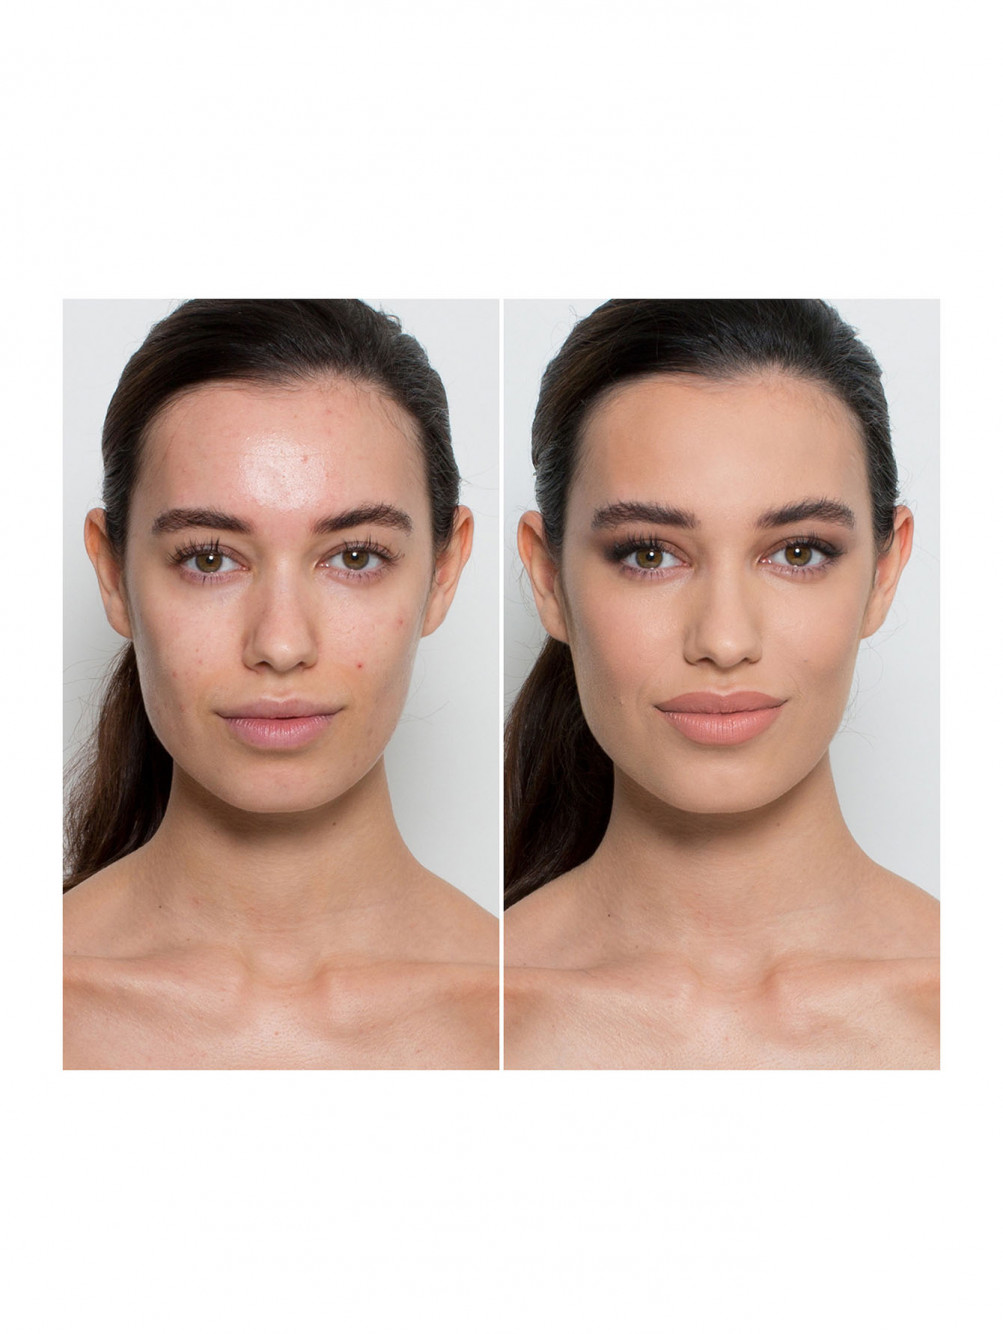 Набор средств макияжа для лица Alibi Full & Flawless, Dune, 3 шт - Обтравка2